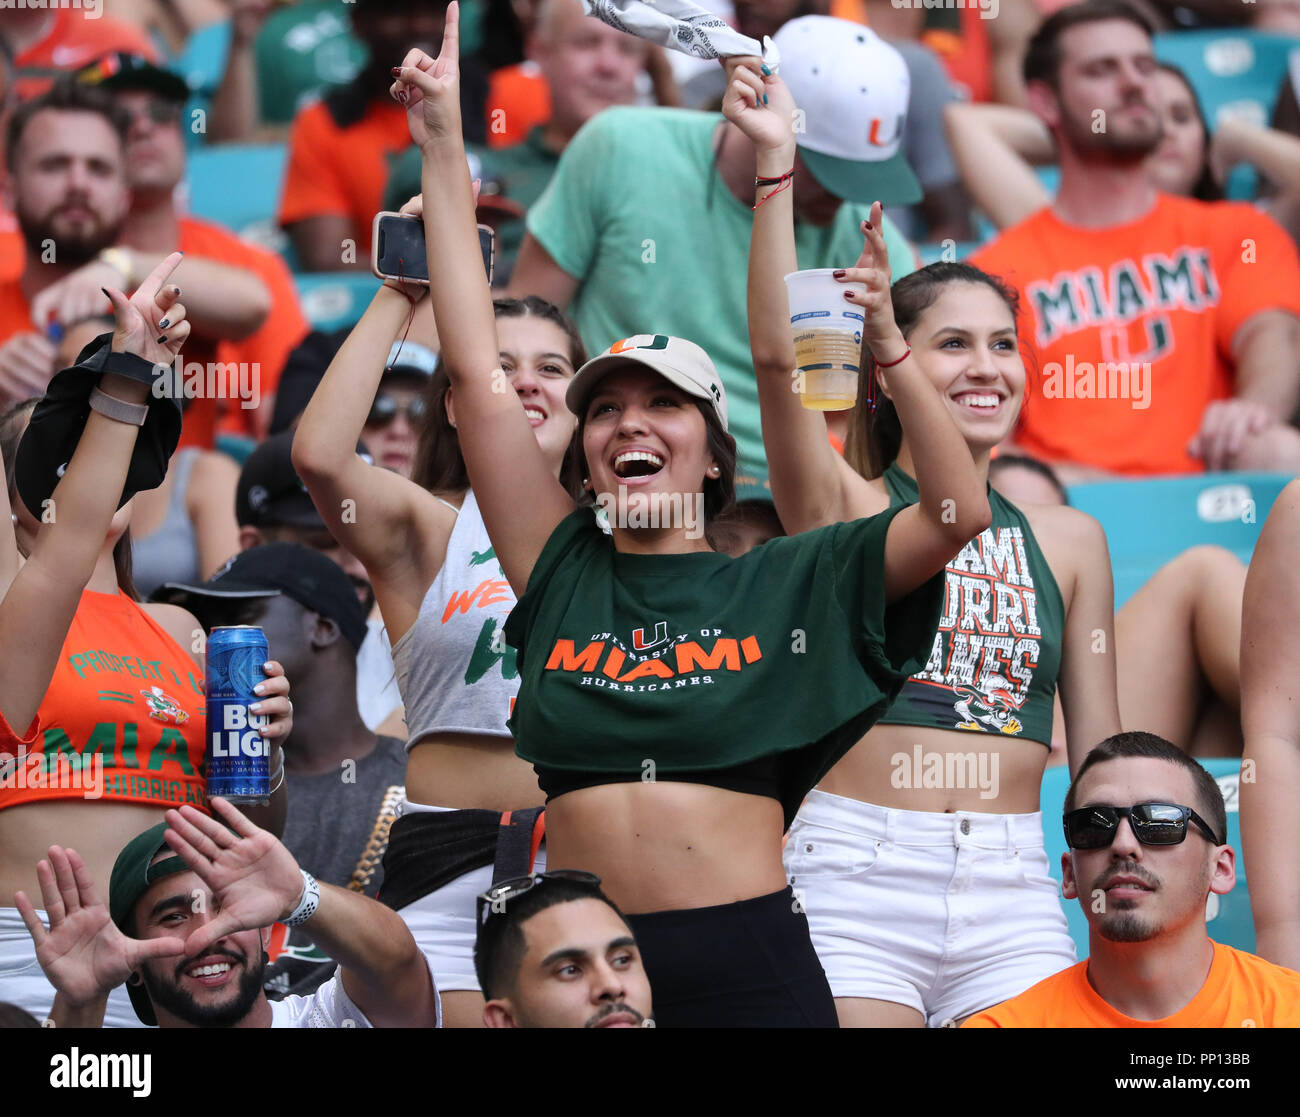 IN PHOTOS: FIU's latest Miami Vice uniform drop has CFB fans